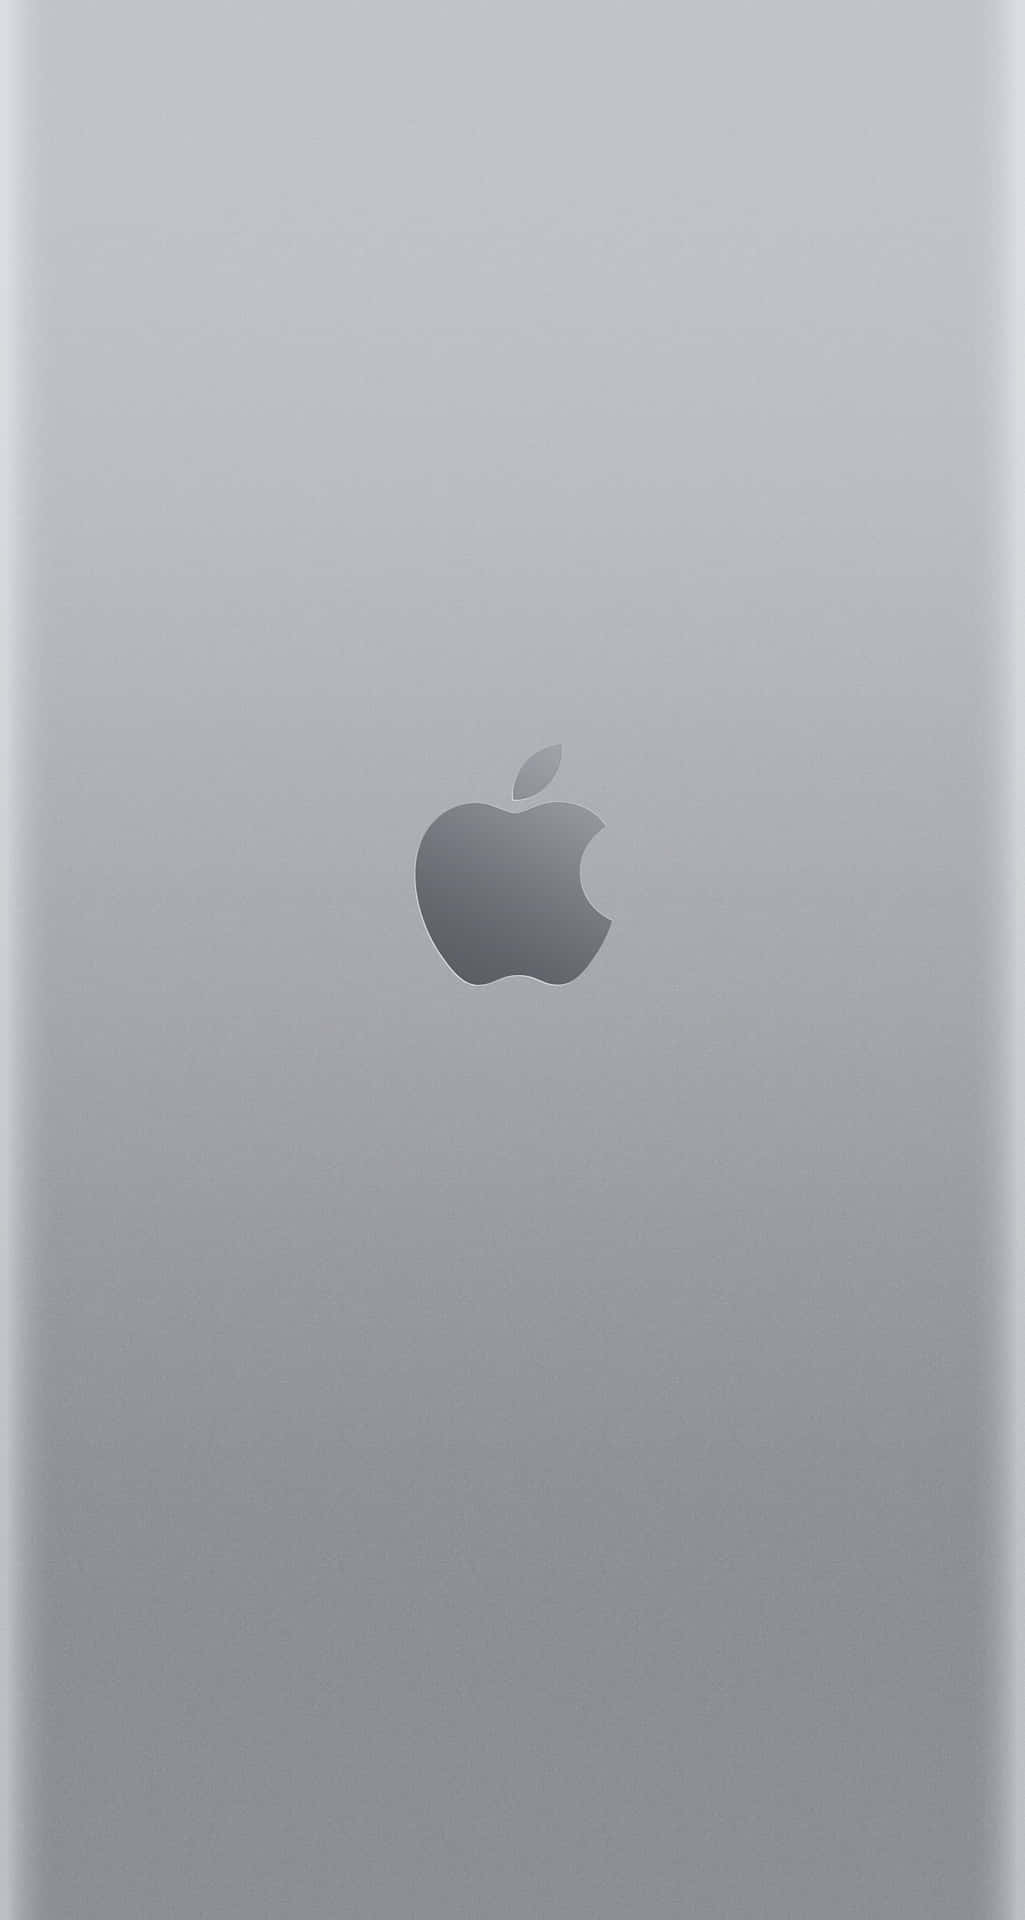 Apple Logo Illuminated Against the Iphone X Wallpaper